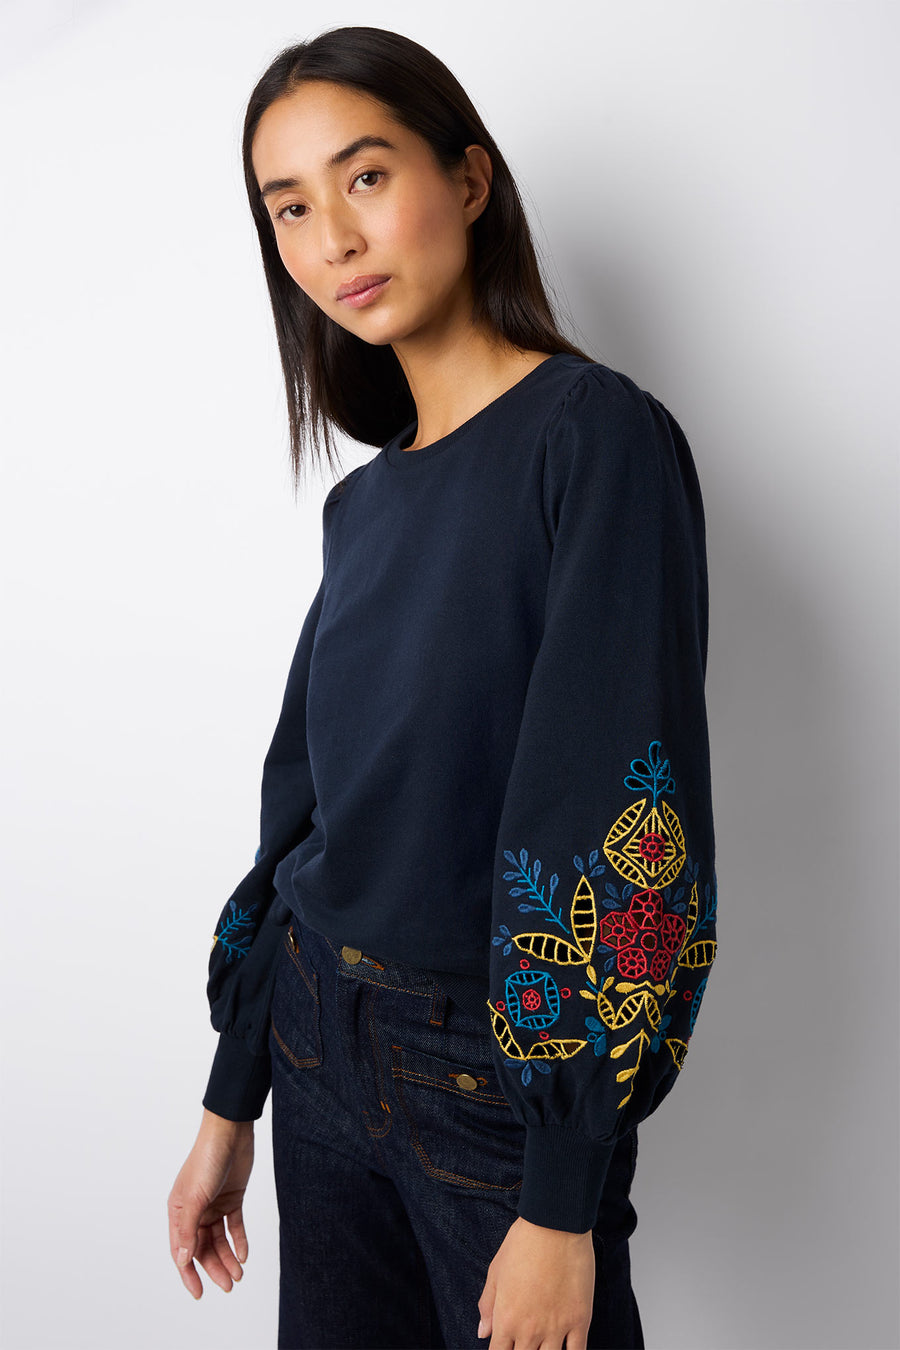 Cora Cutwork Embroidery Sweatshirt - Navy